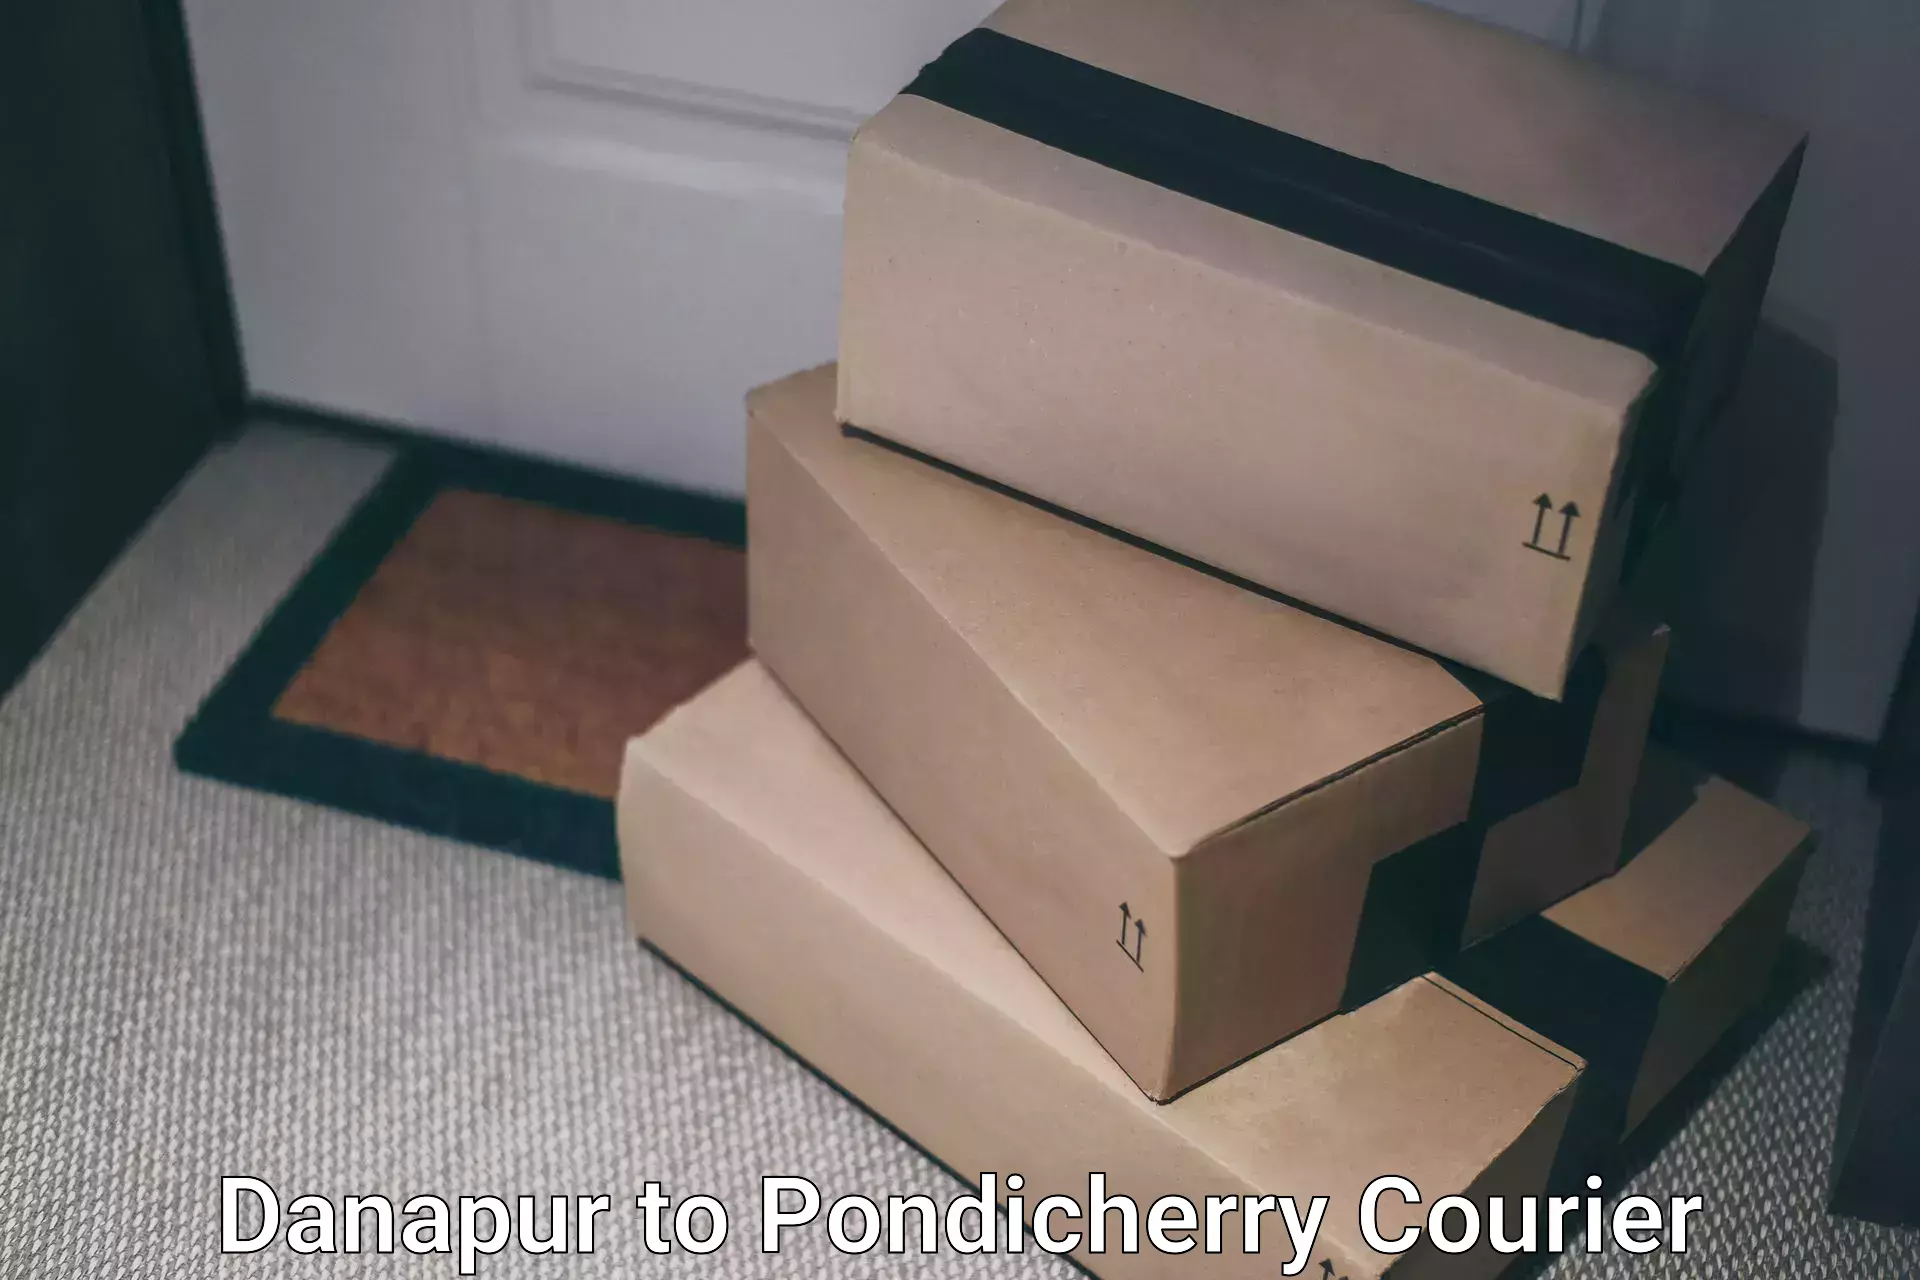 International parcel service Danapur to Pondicherry